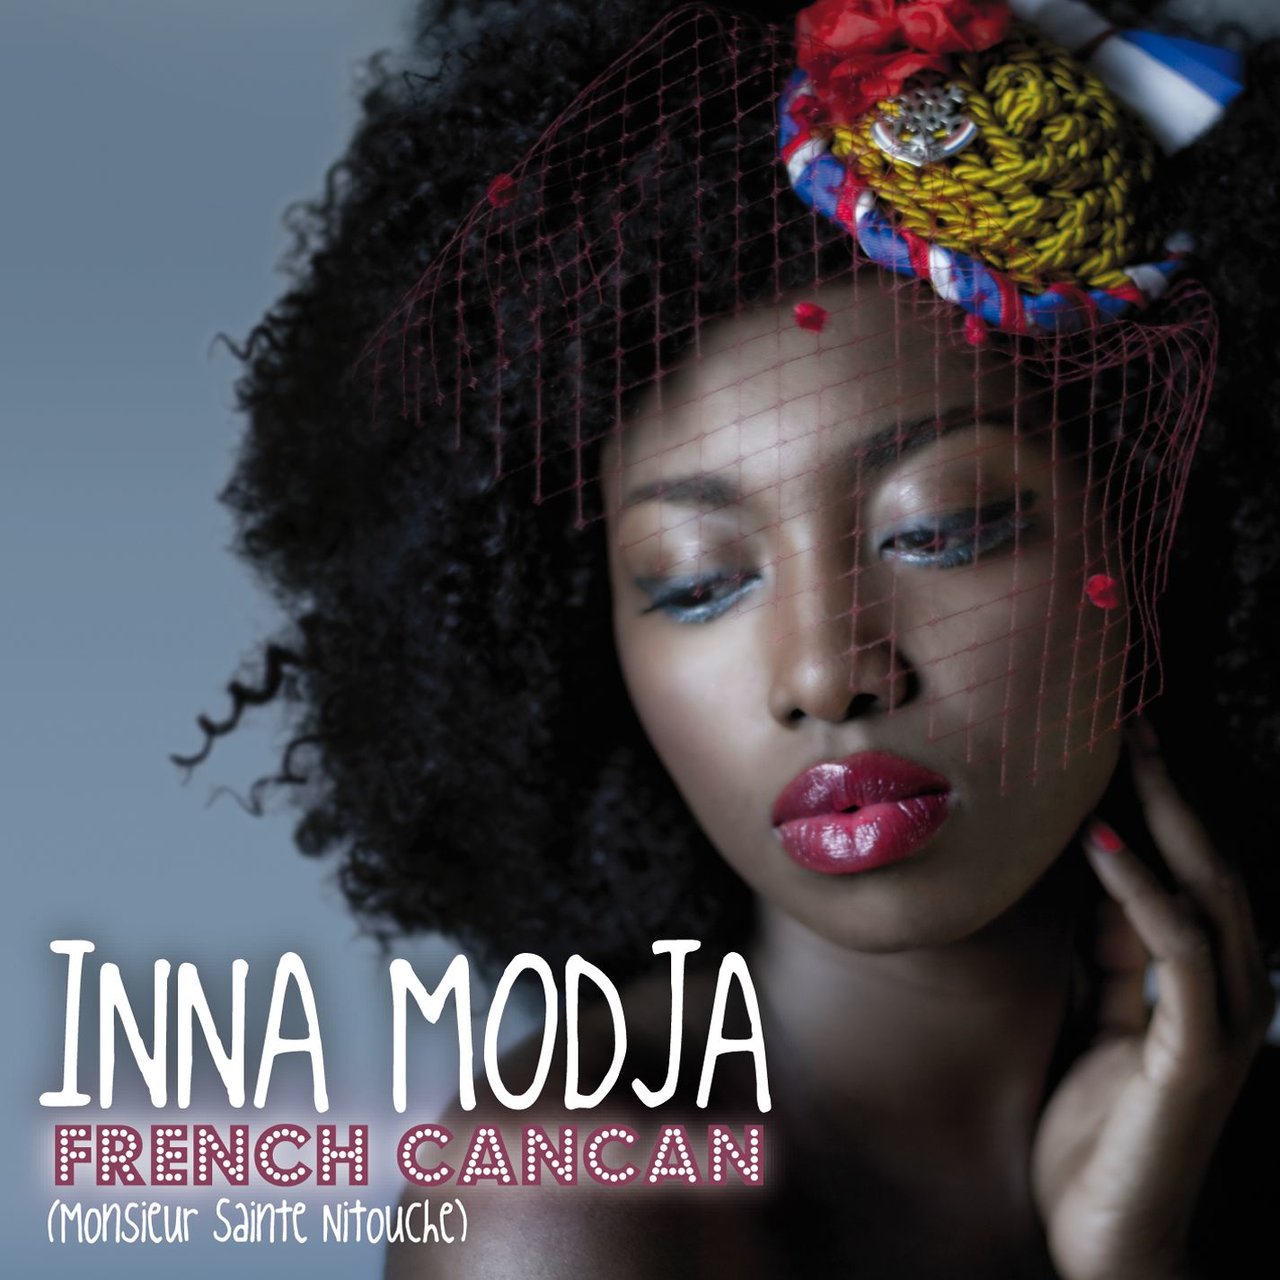 Inna Modja — French Cancan (Monsieur Sainte Nitouche) cover artwork